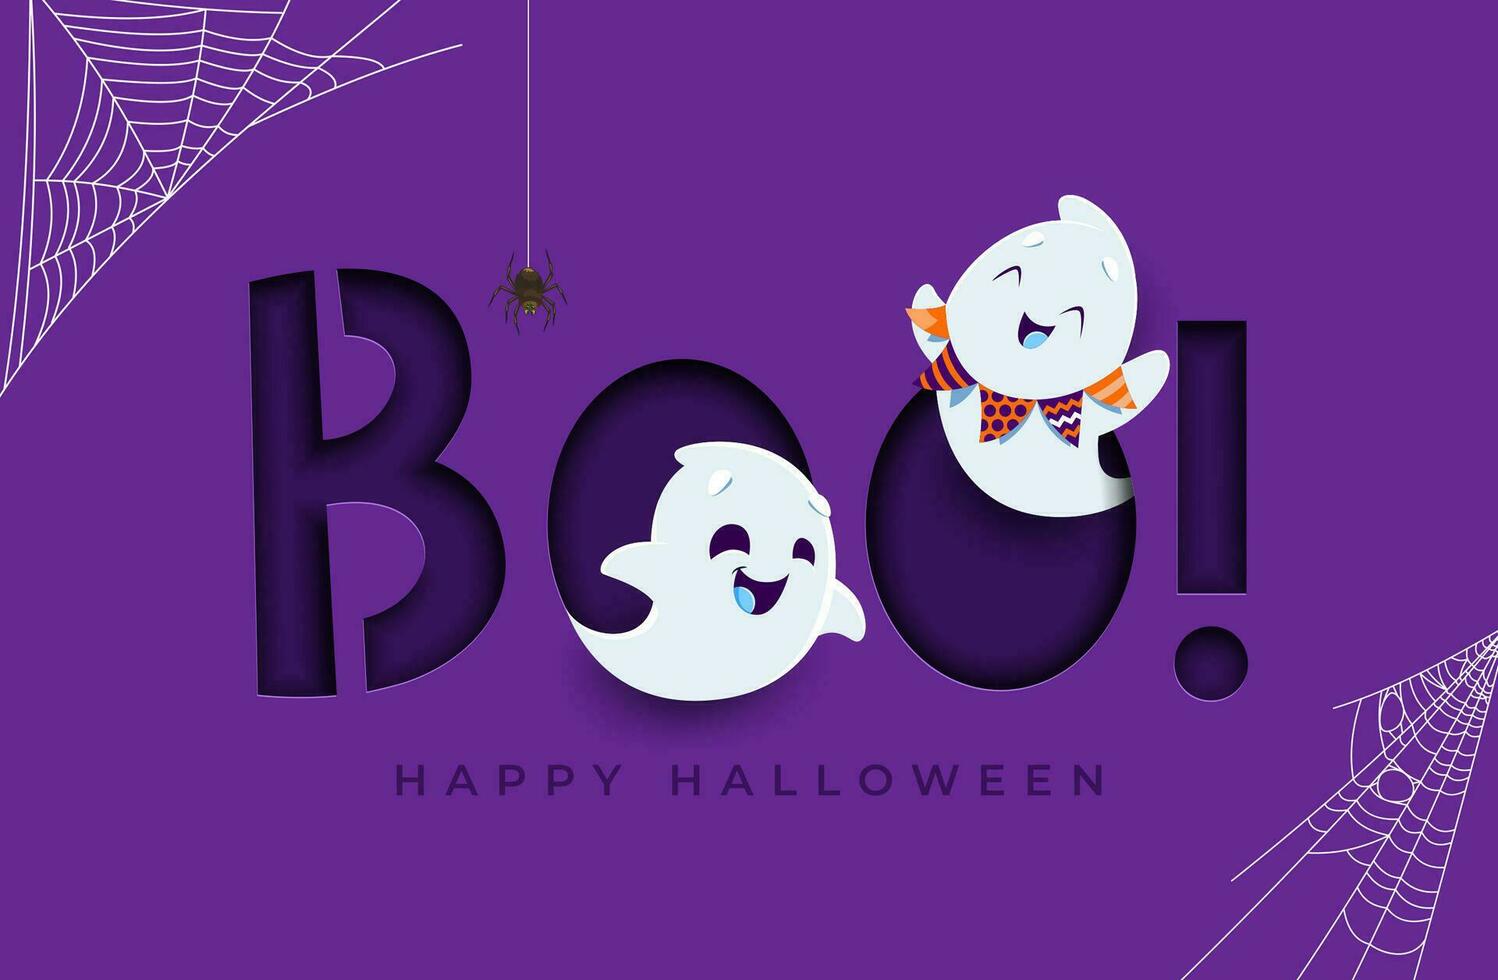 Halloween boo banner with cute kawaii ghosts vector